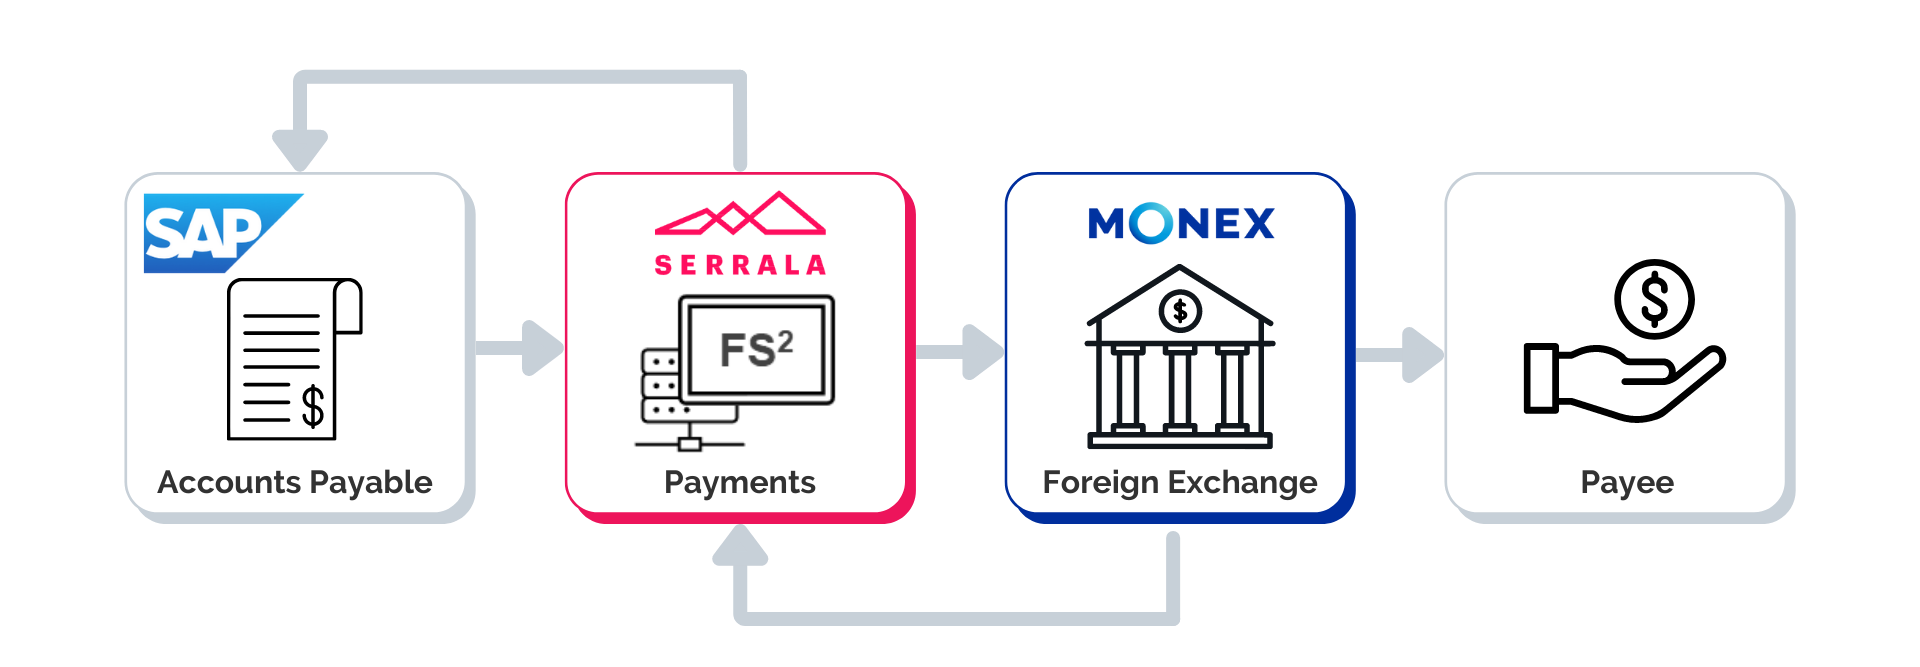 Serrala | Monex SAP FX Integration Flow